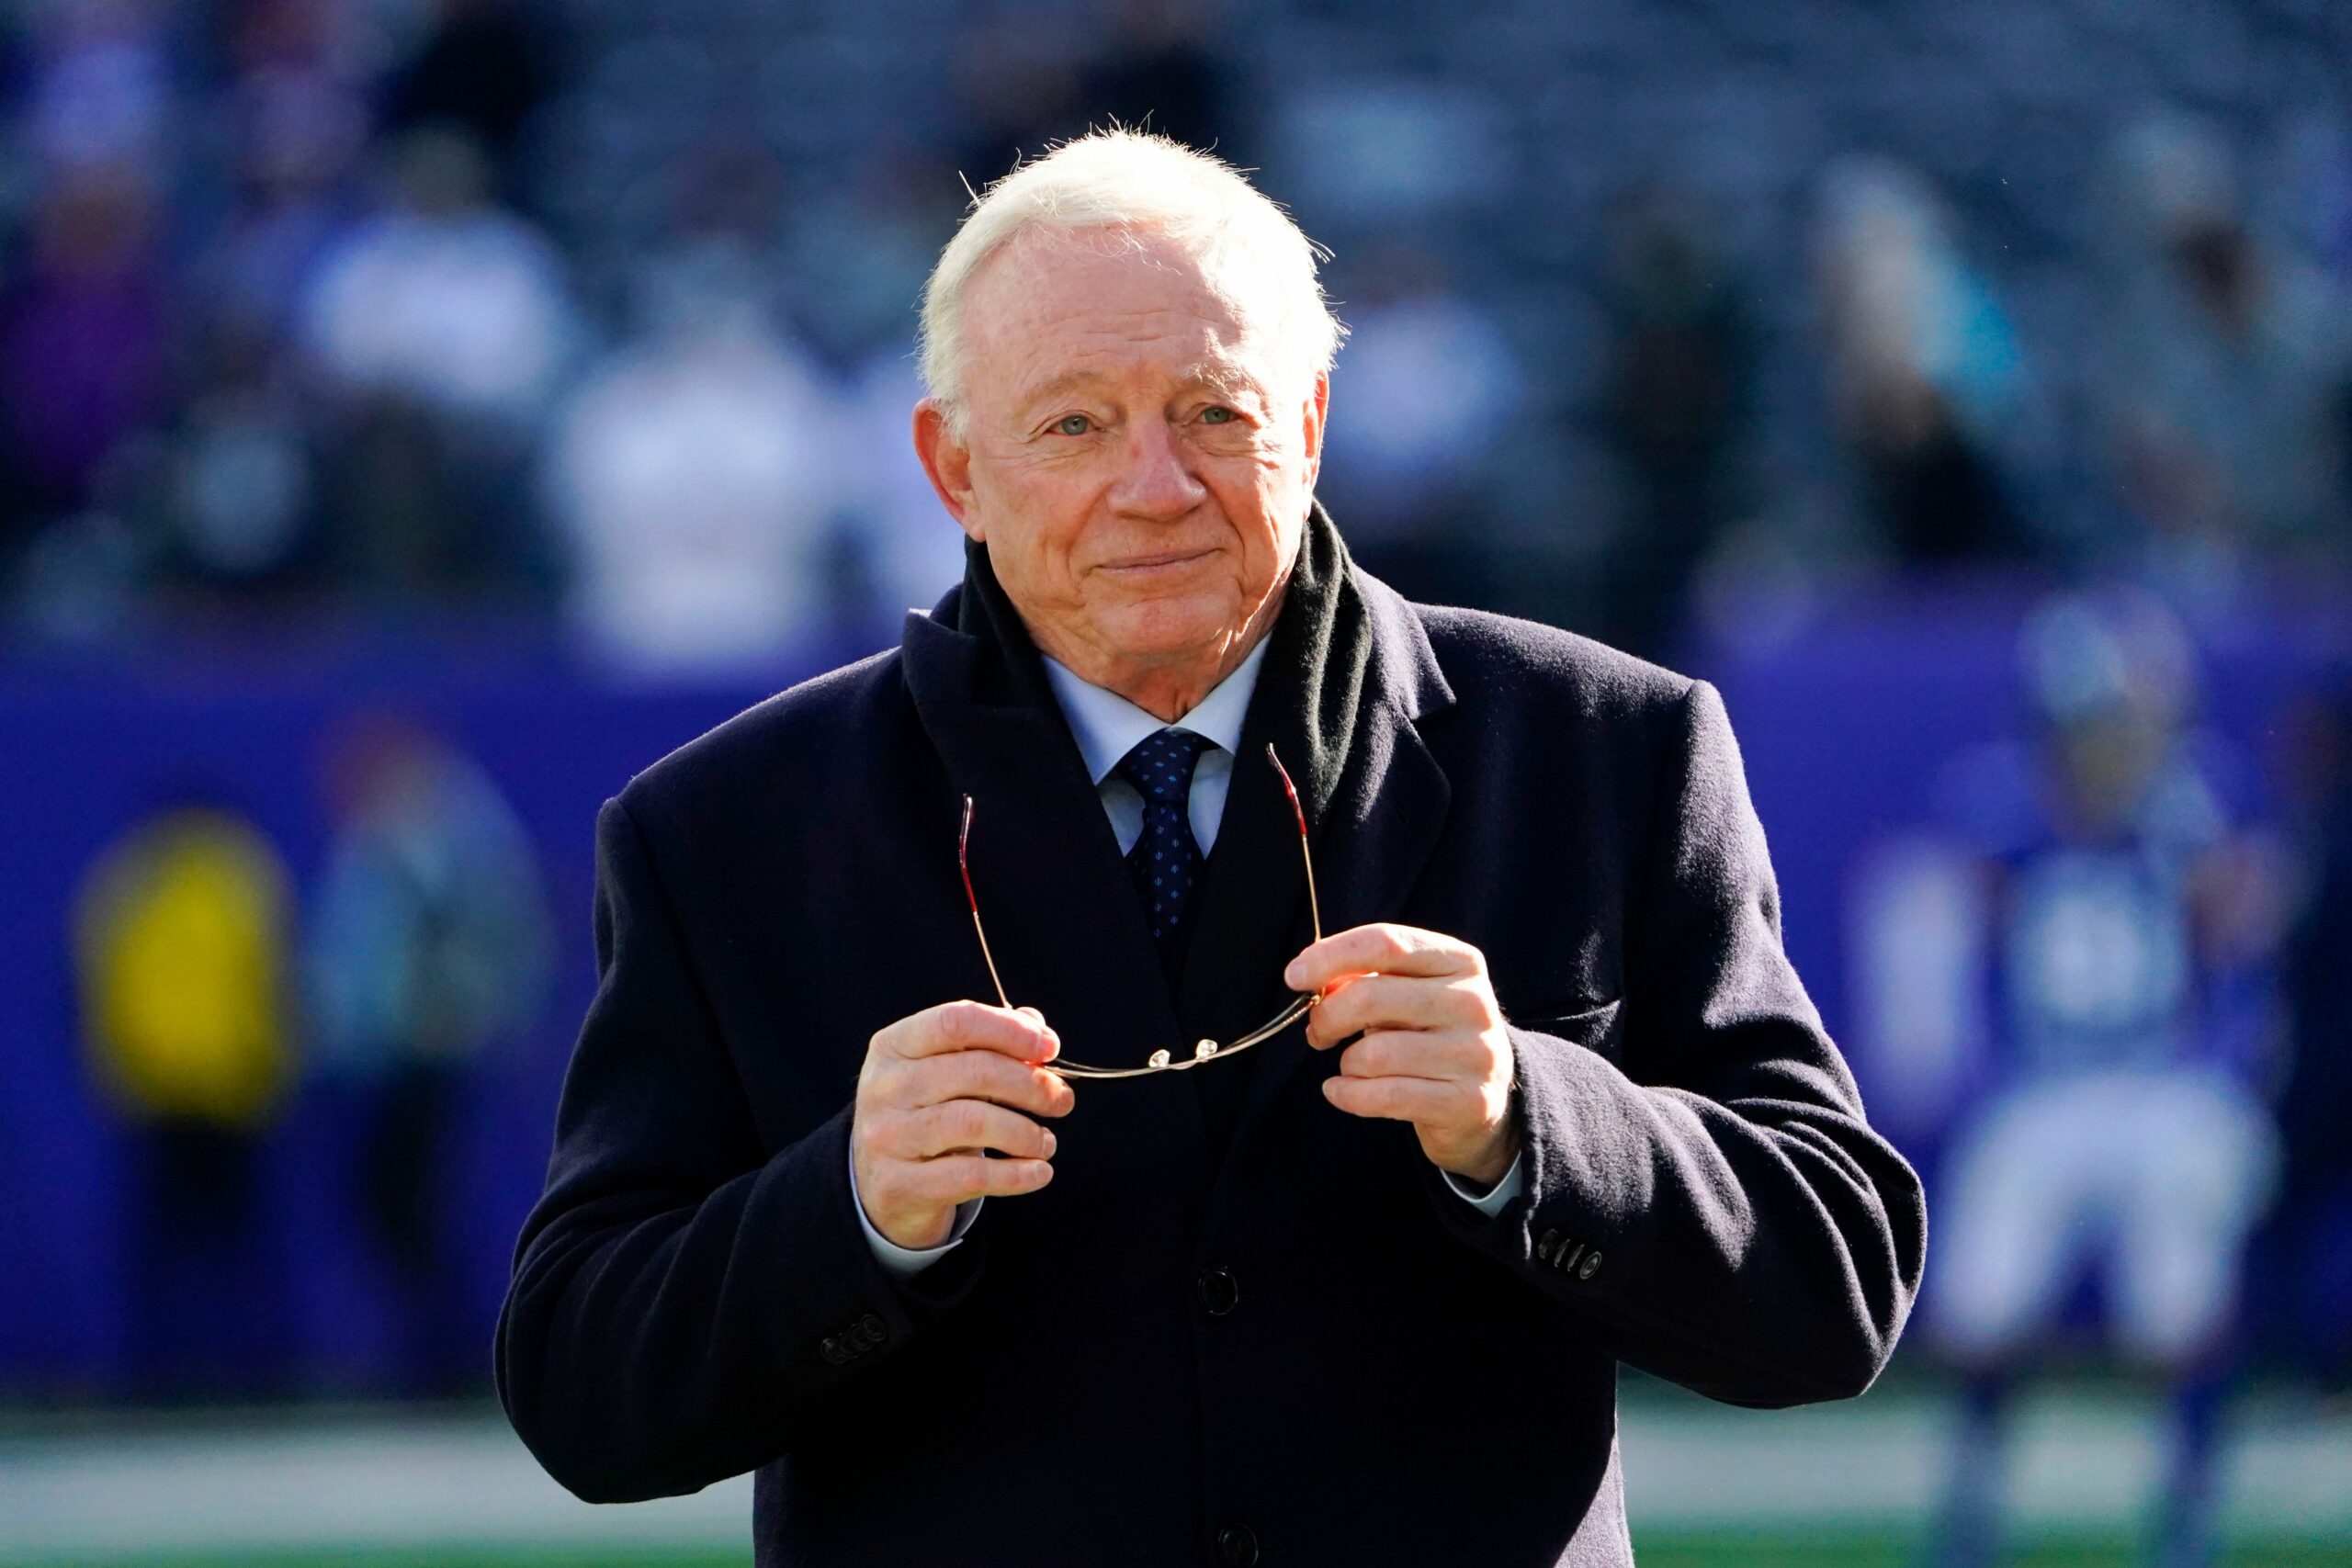 Jerry Jones wants the NFL’s investigation into Dan Snyder released